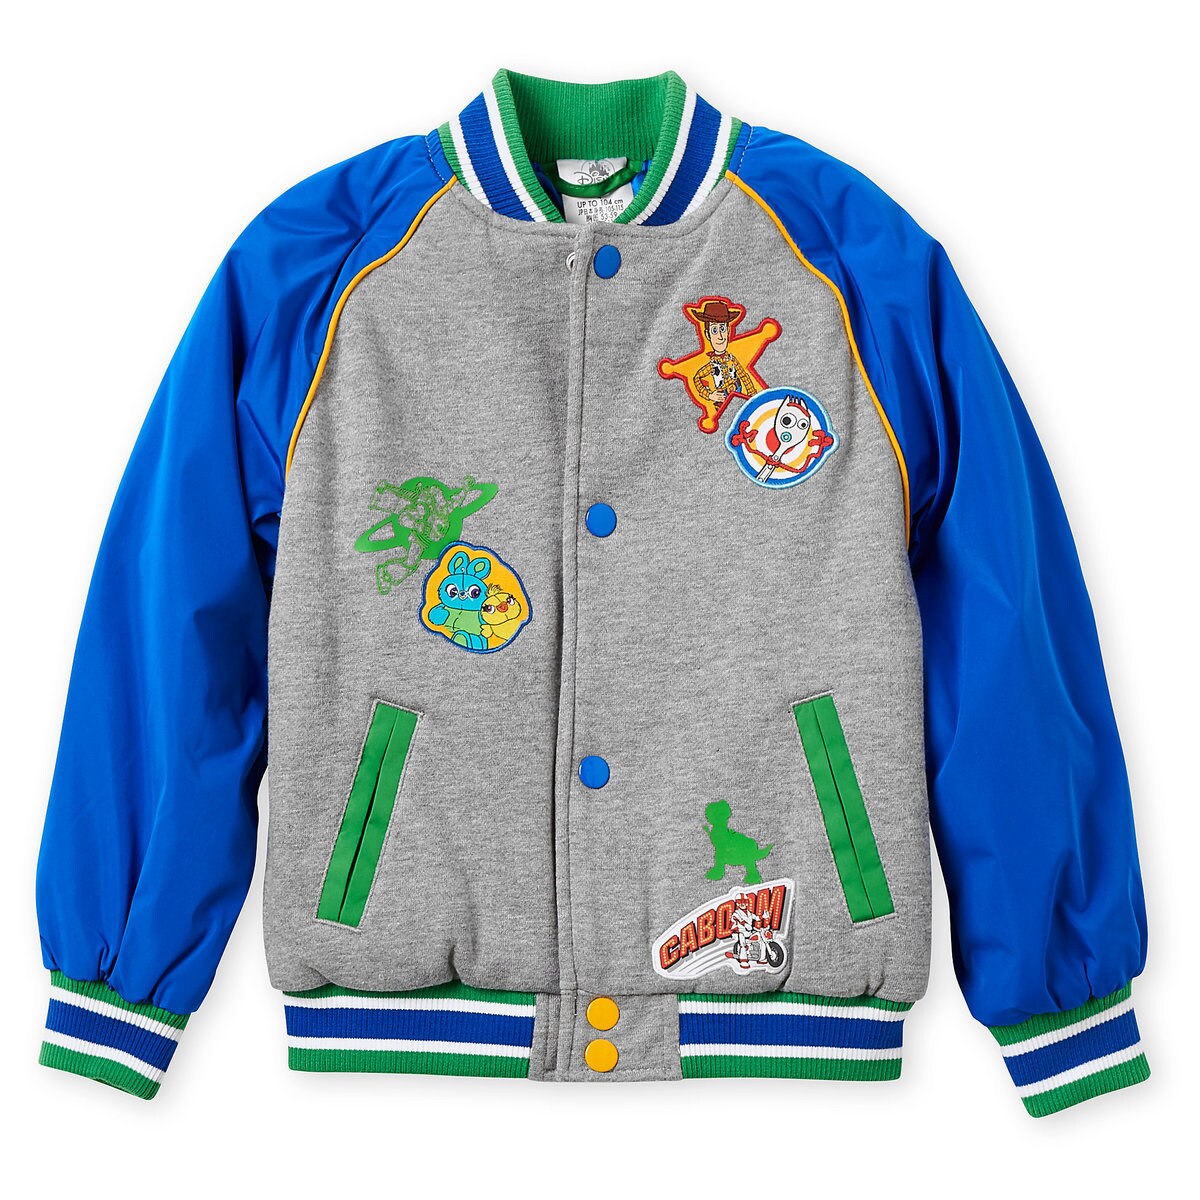 Product Image of Toy Story 4 Varsity Jacket for Boys - Personalized # 1